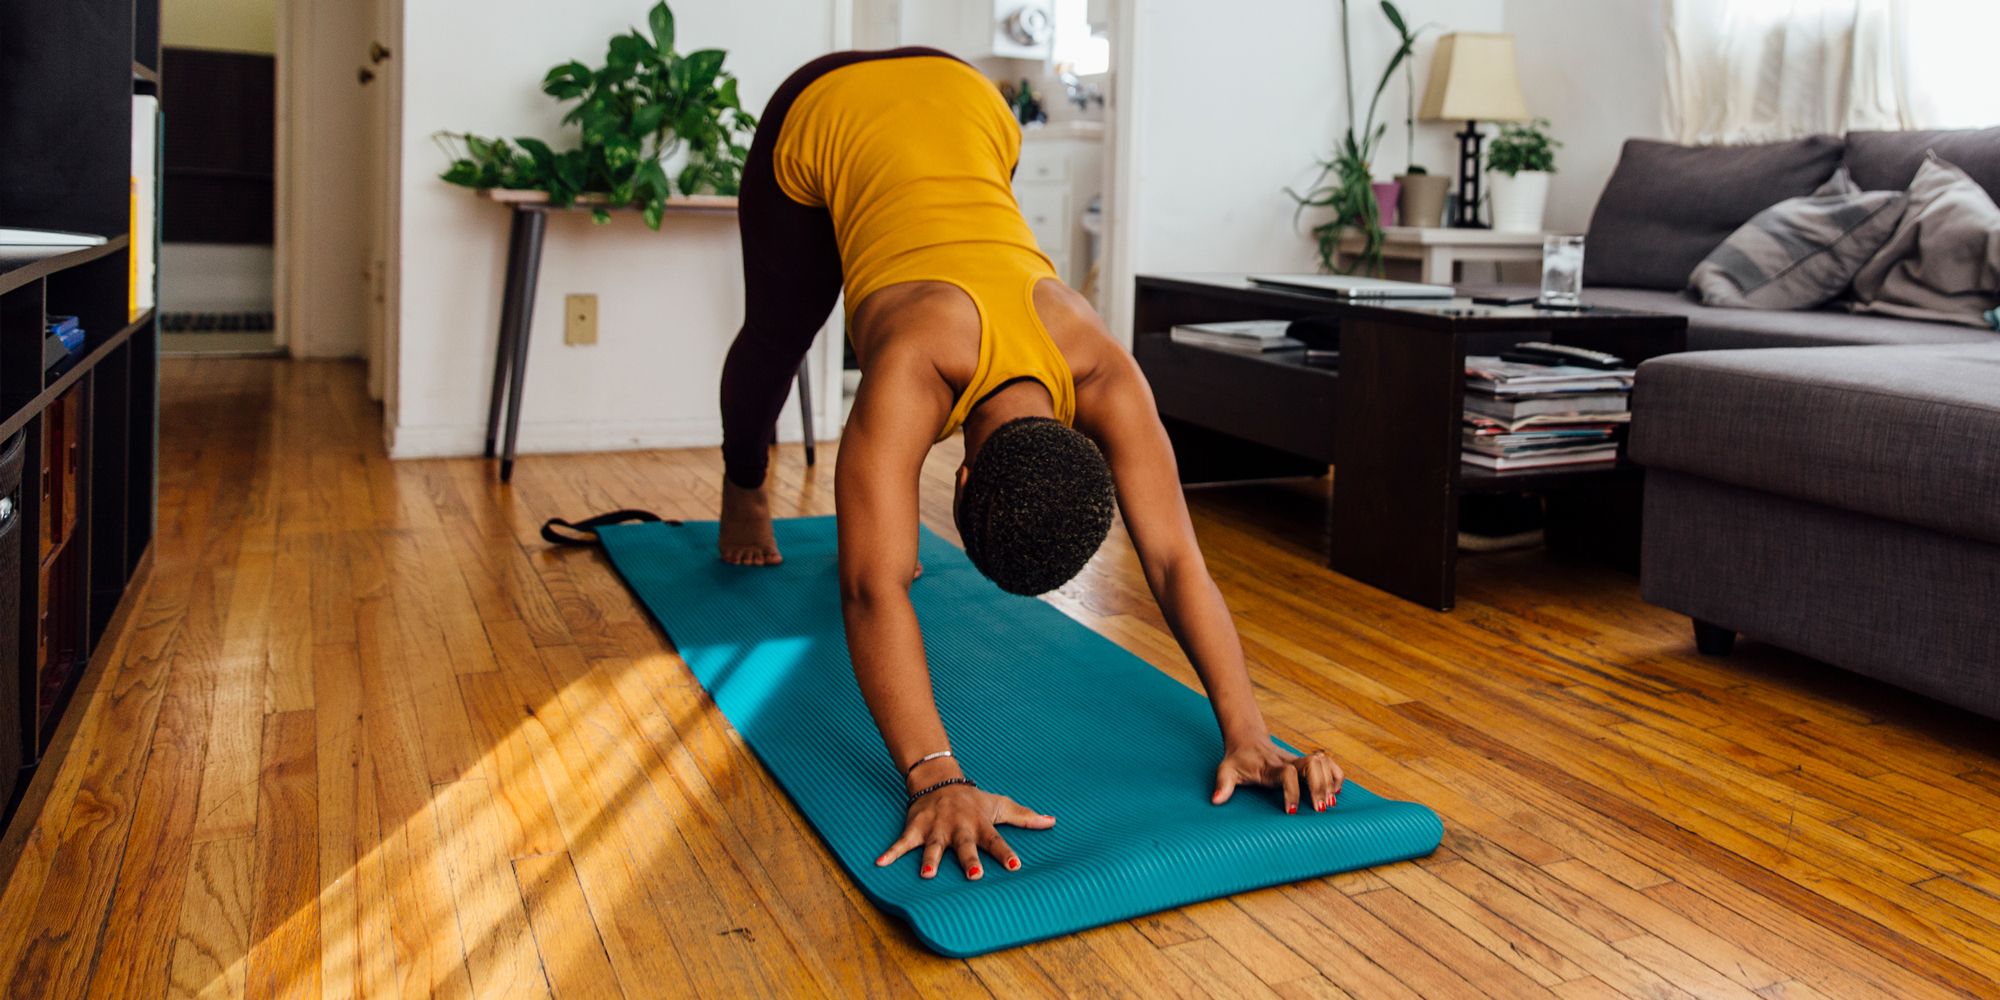 Yoga Knee Pad Cushion Anti-Slip Thick Exercise Travel Mat Mat Fitness Floor ~NEW 